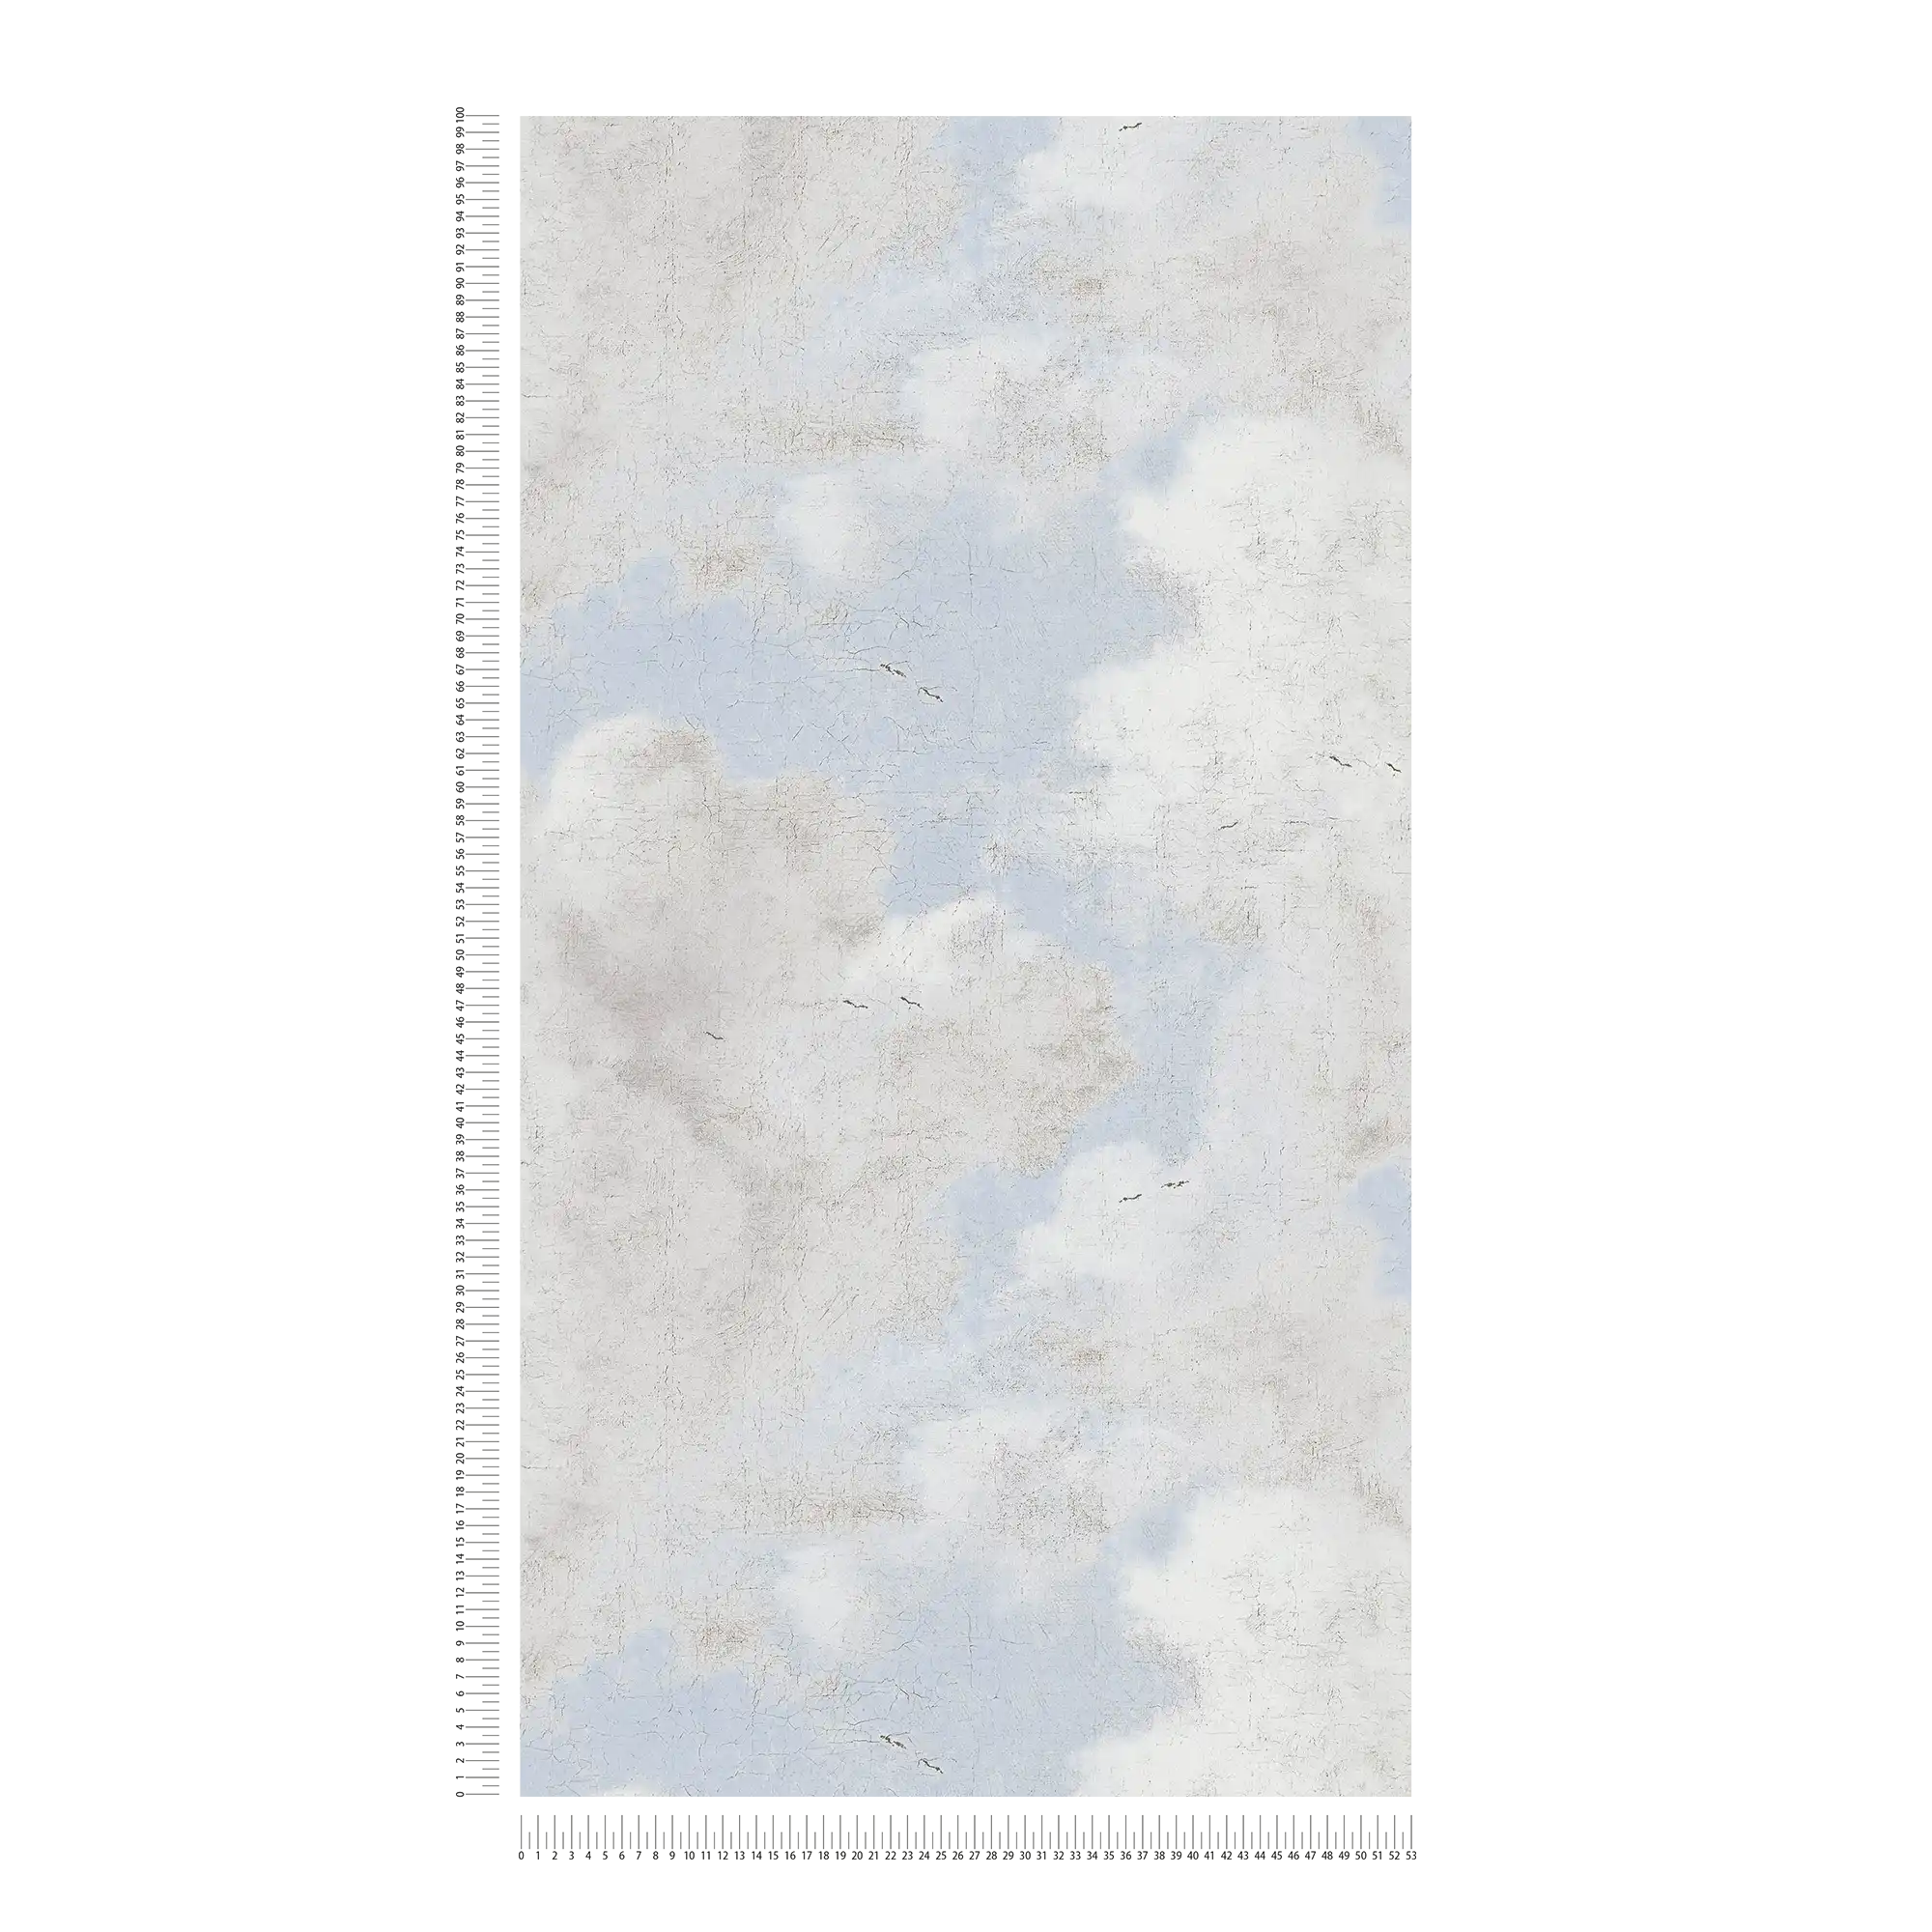             Himmel-Tapete im klassischen Kunststil – Grau, Blau
        